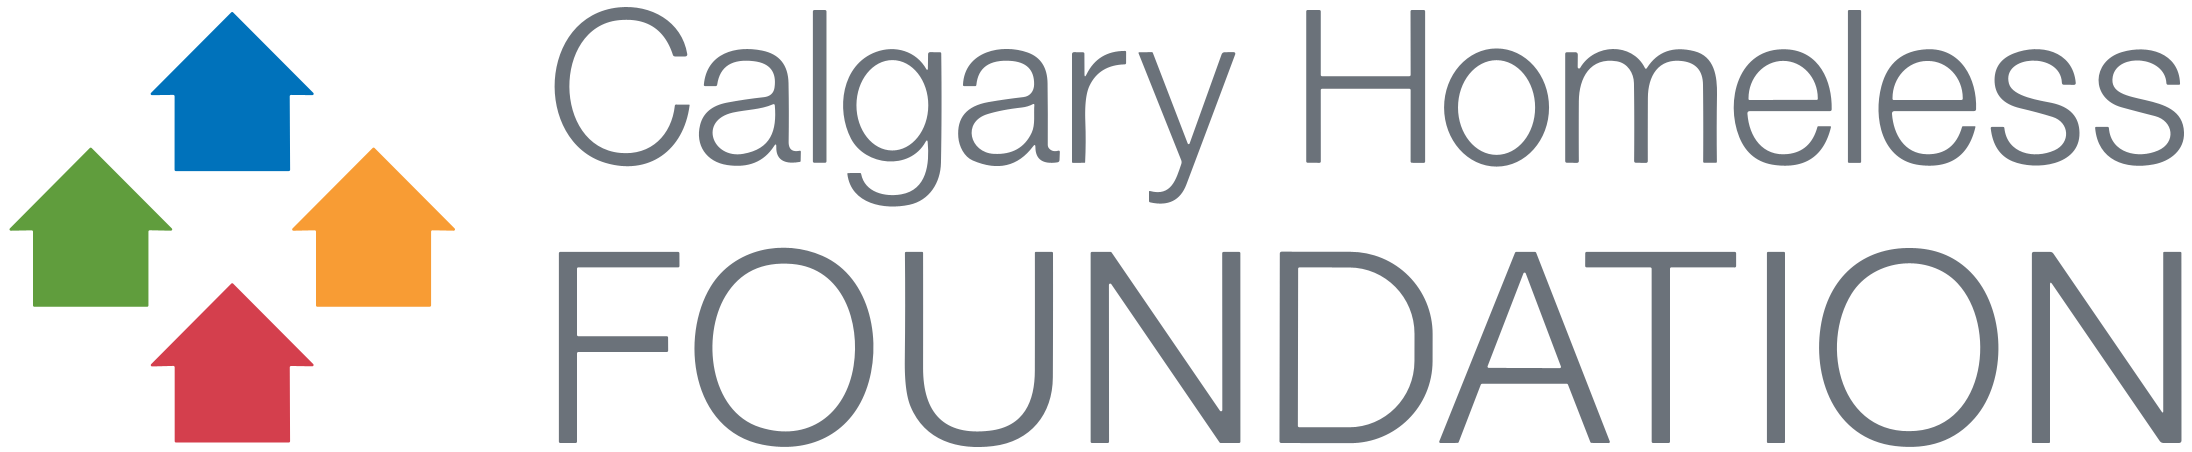 Logo for Calgary Homeless Foundation on a transparent background